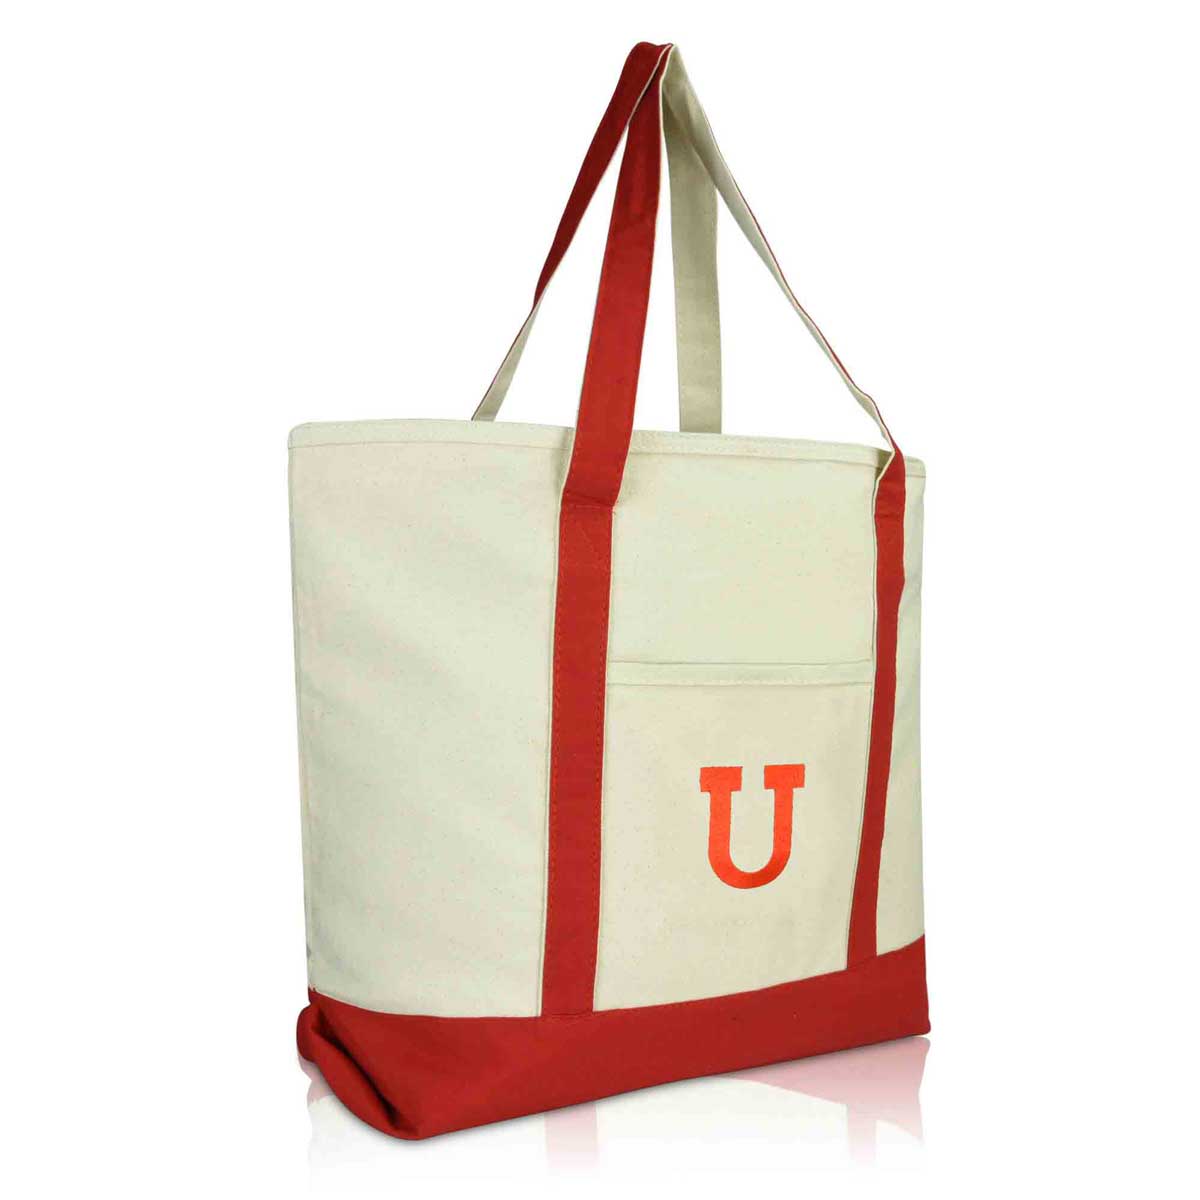 Dalix Initial Tote Bag Personalized Monogram Zippered Top Letter - U